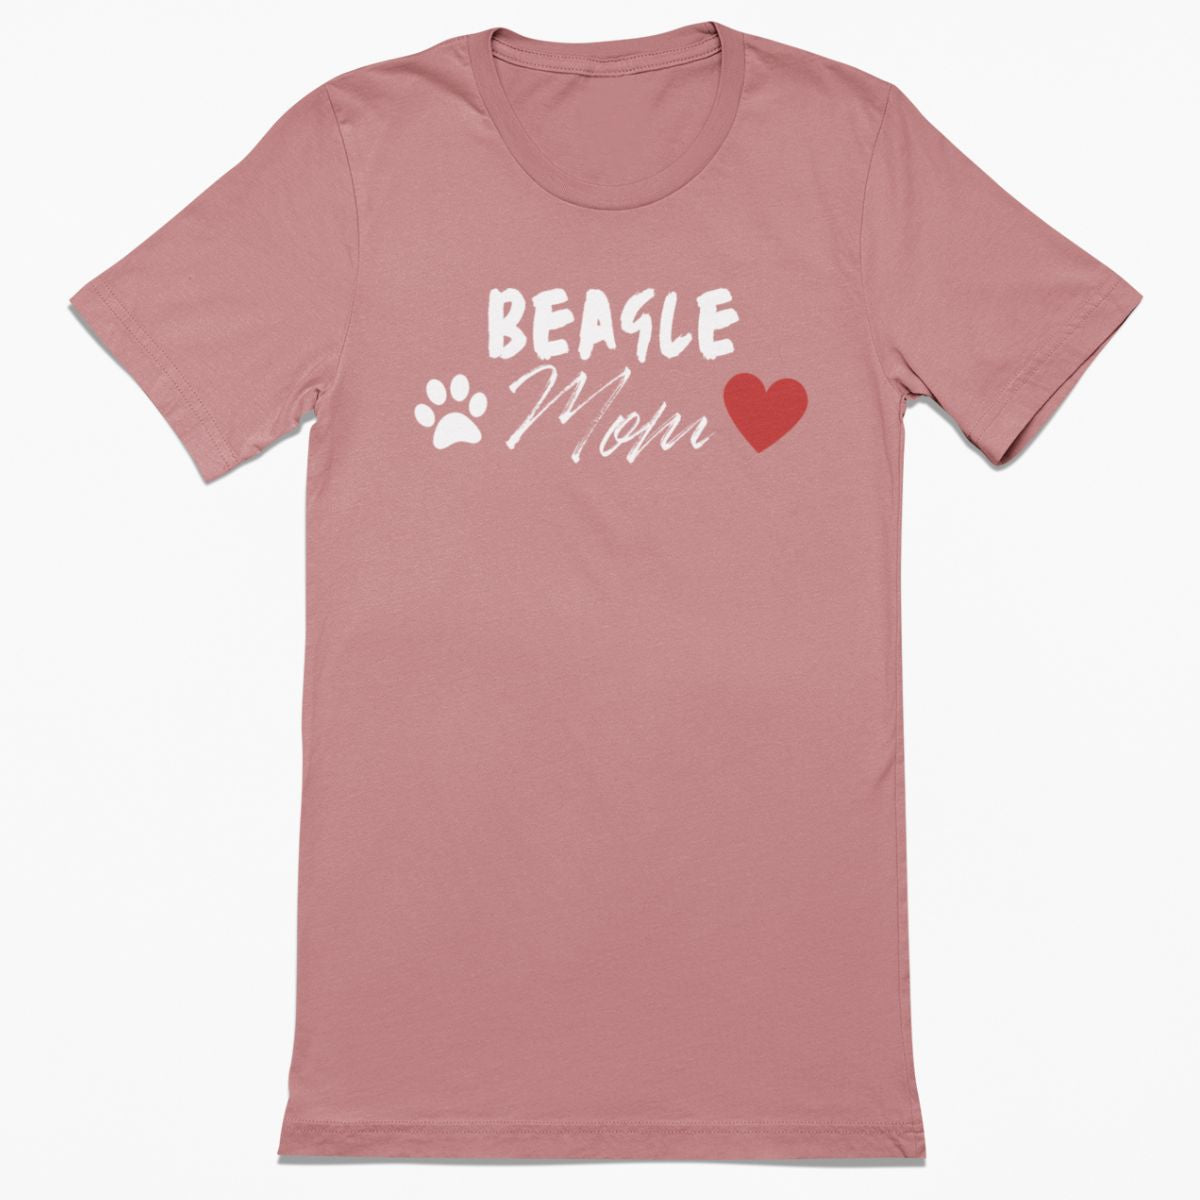 Beagle Mom Shirt